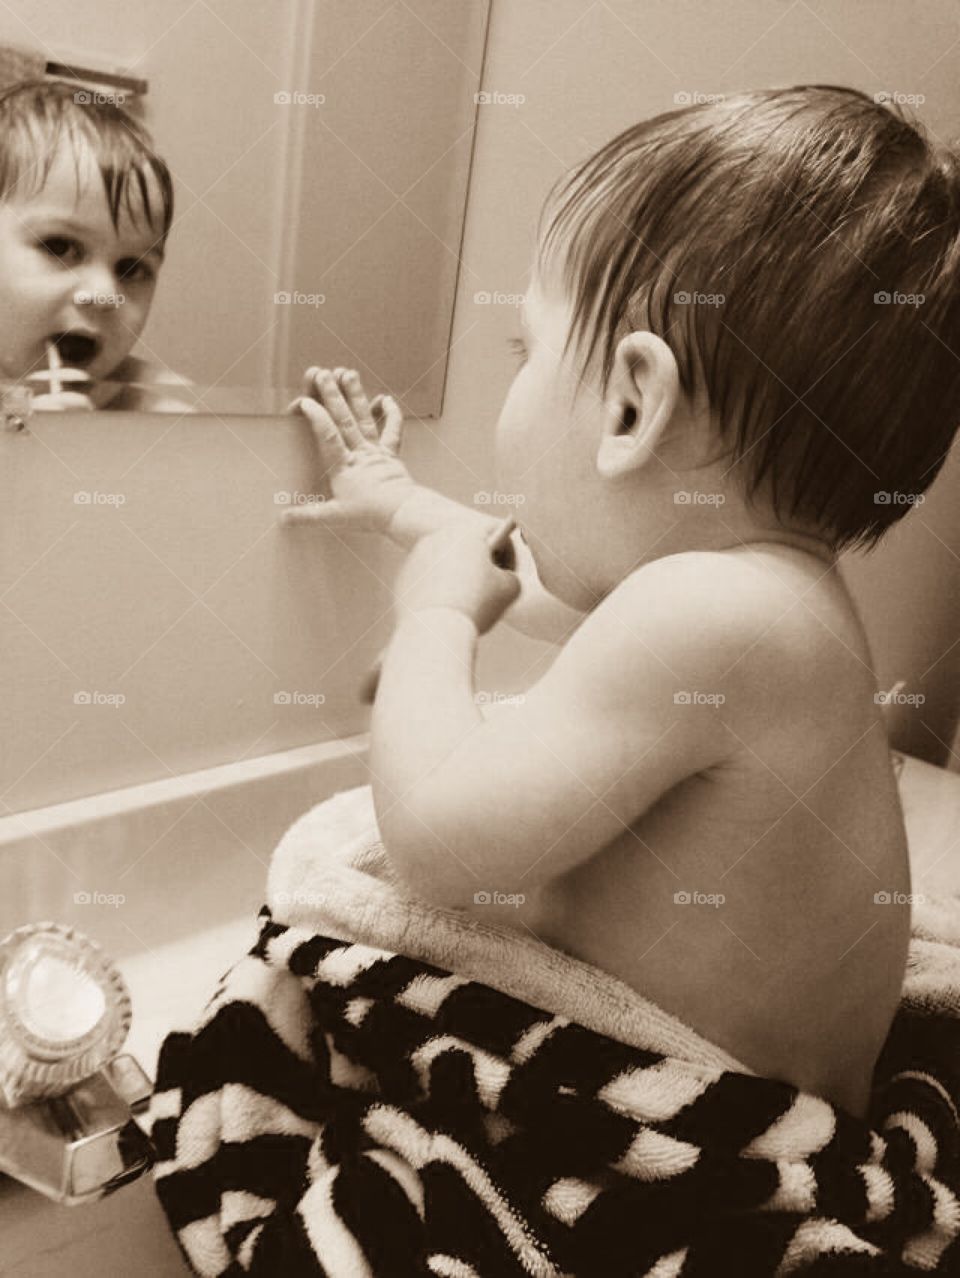 Big boy brushing his teeth. 